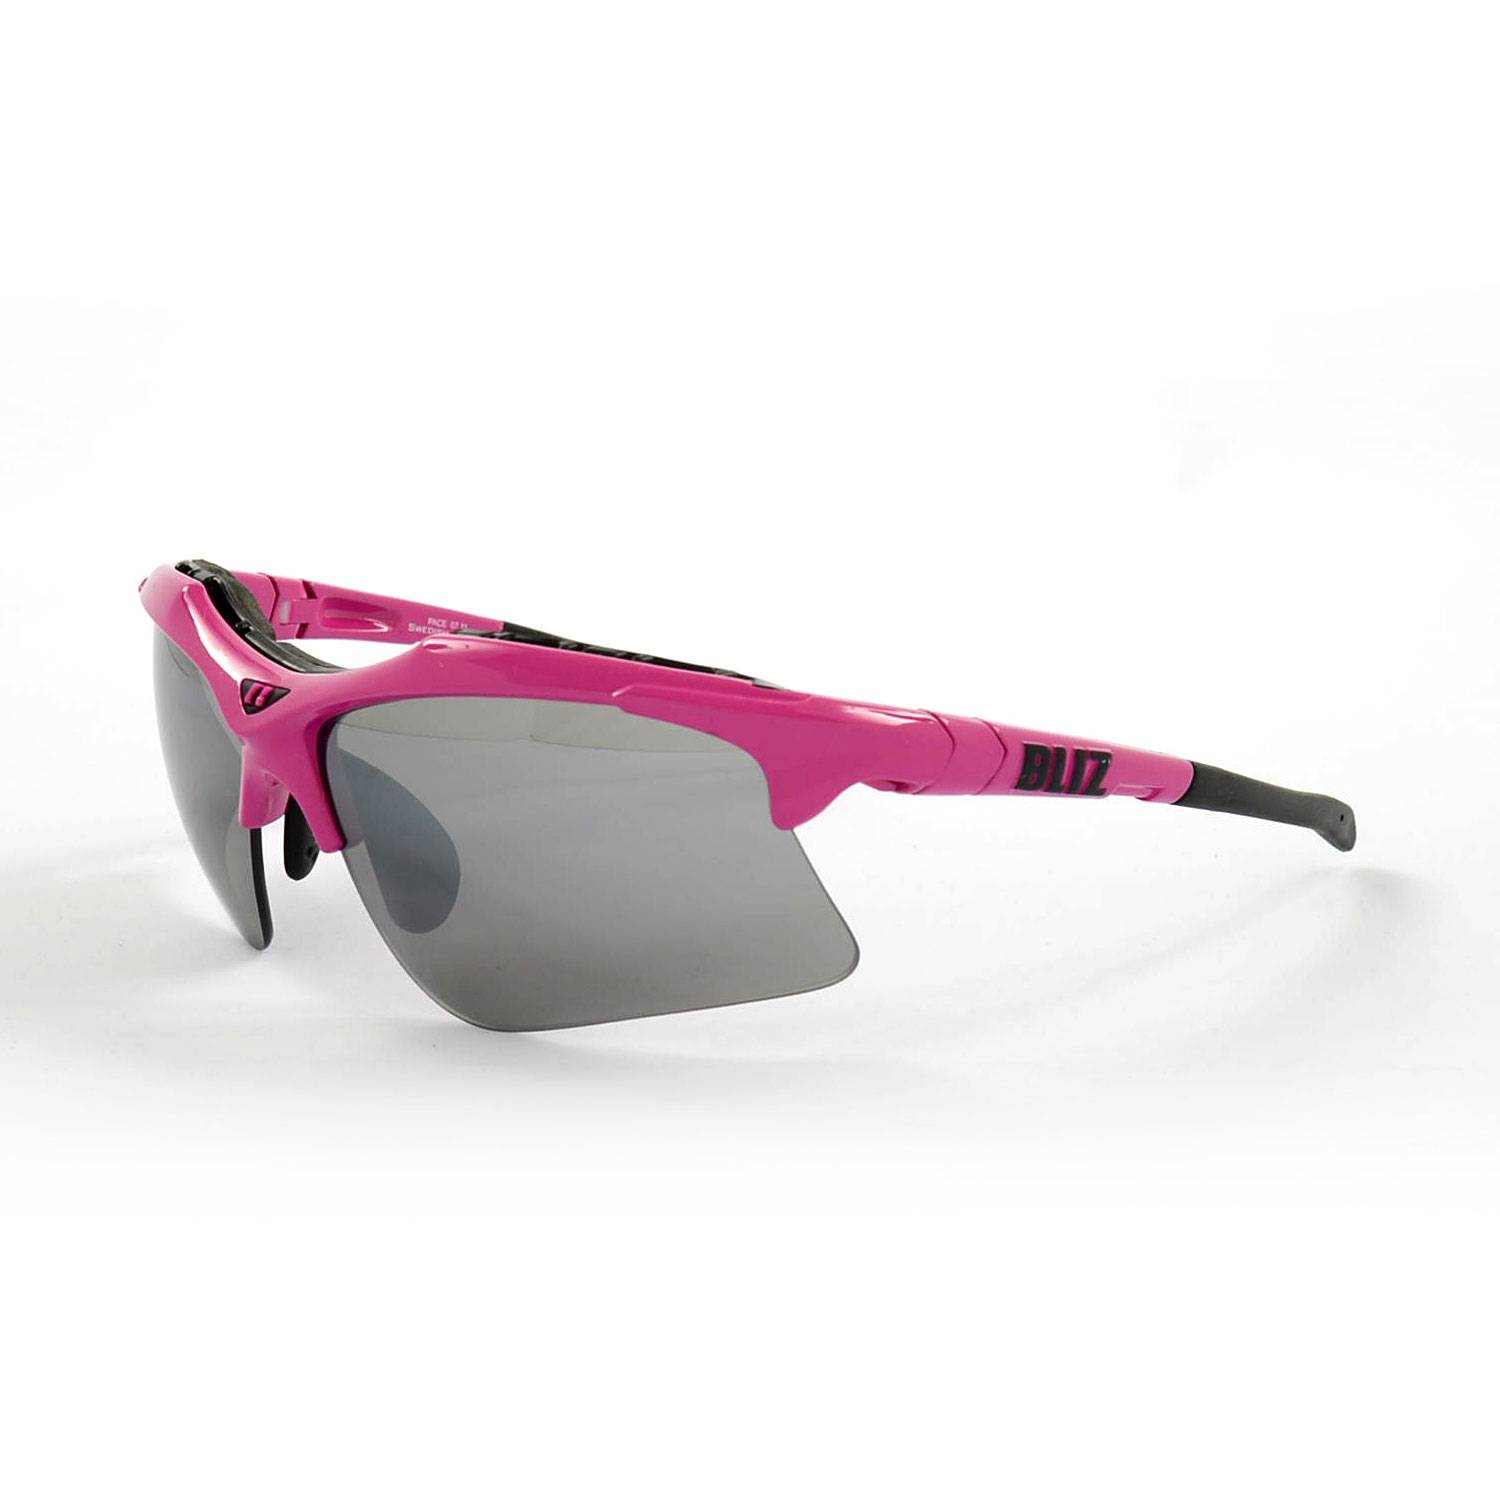 Blitz очки. Очки Bliz Breeze. Очки Bliz Active Speed Pink 9061-41. Лыжные очки Bliz. Bliz Fusion.